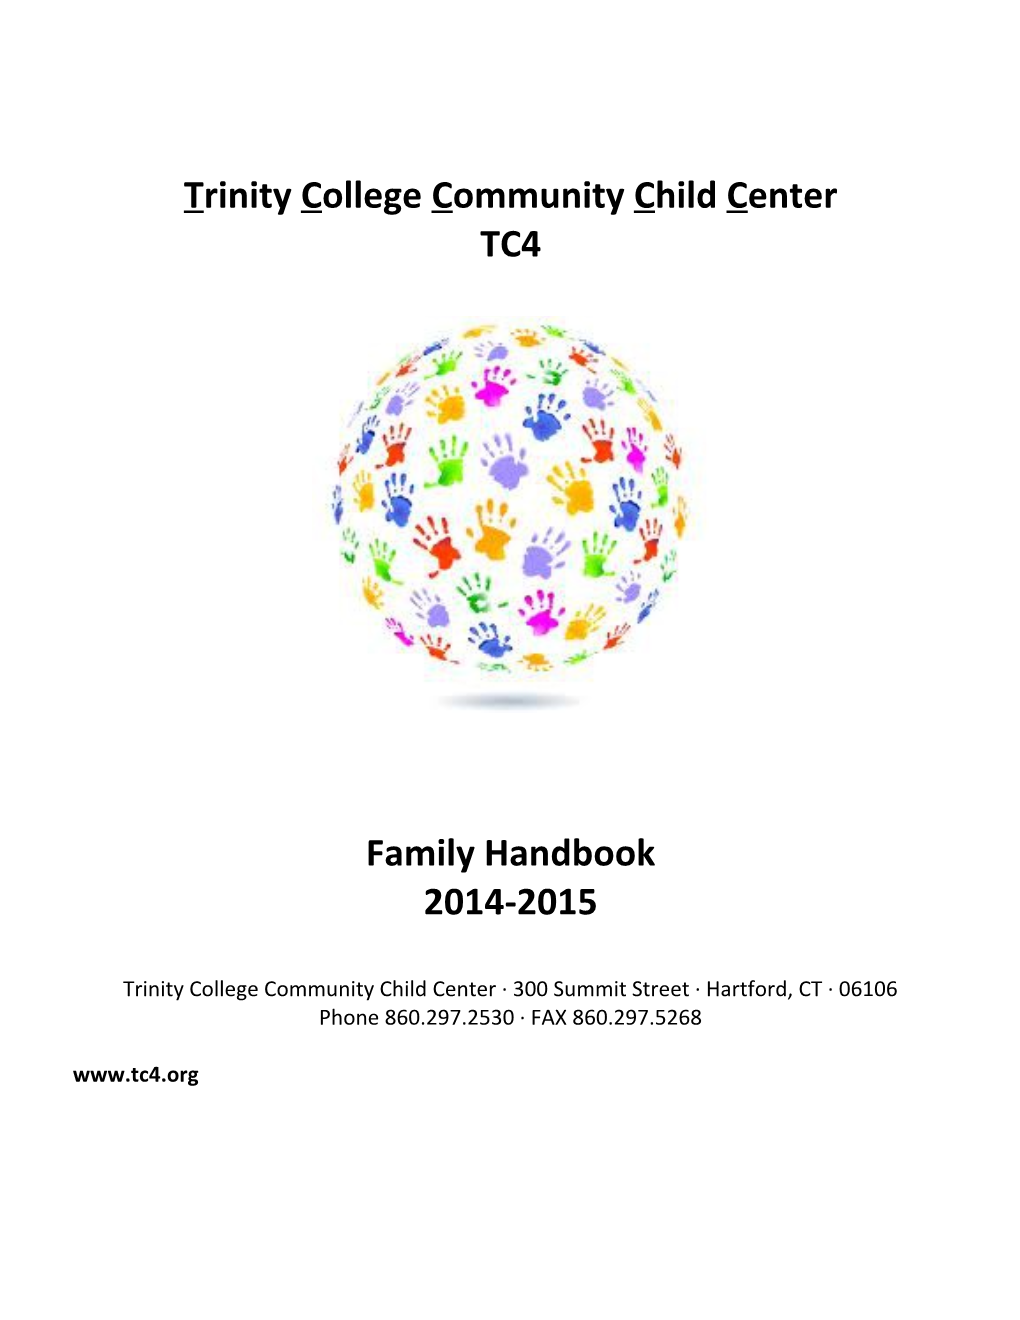 Trinitycollegecommunitychildcenter 300 Summit Street Hartford, CT 06106